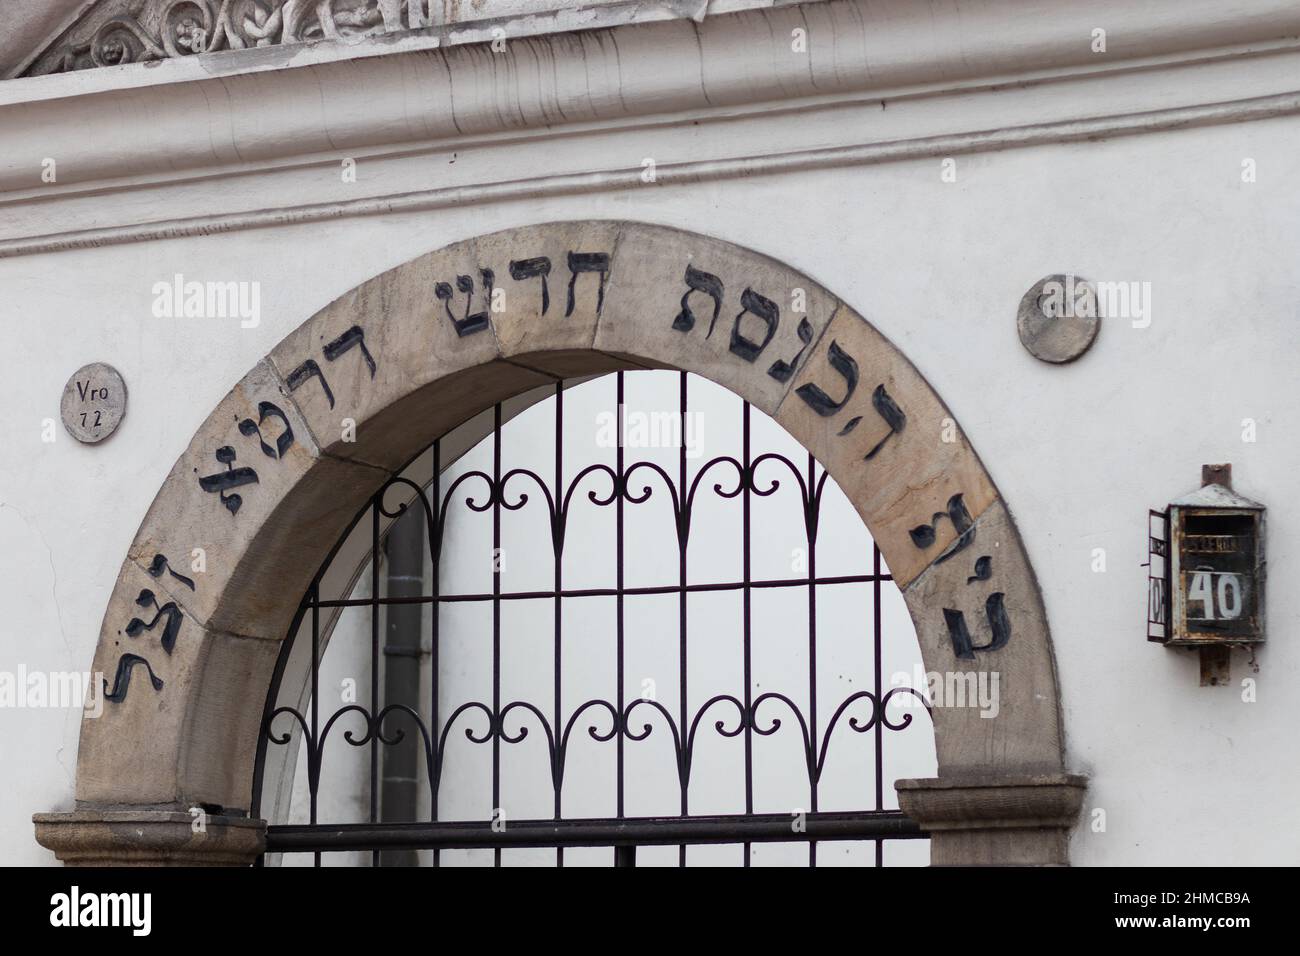 09-12-2021. krakow-poland. The ancient entrance gate Remah Synagogue, Kazimierz Krakow neighborhood, Stock Photo